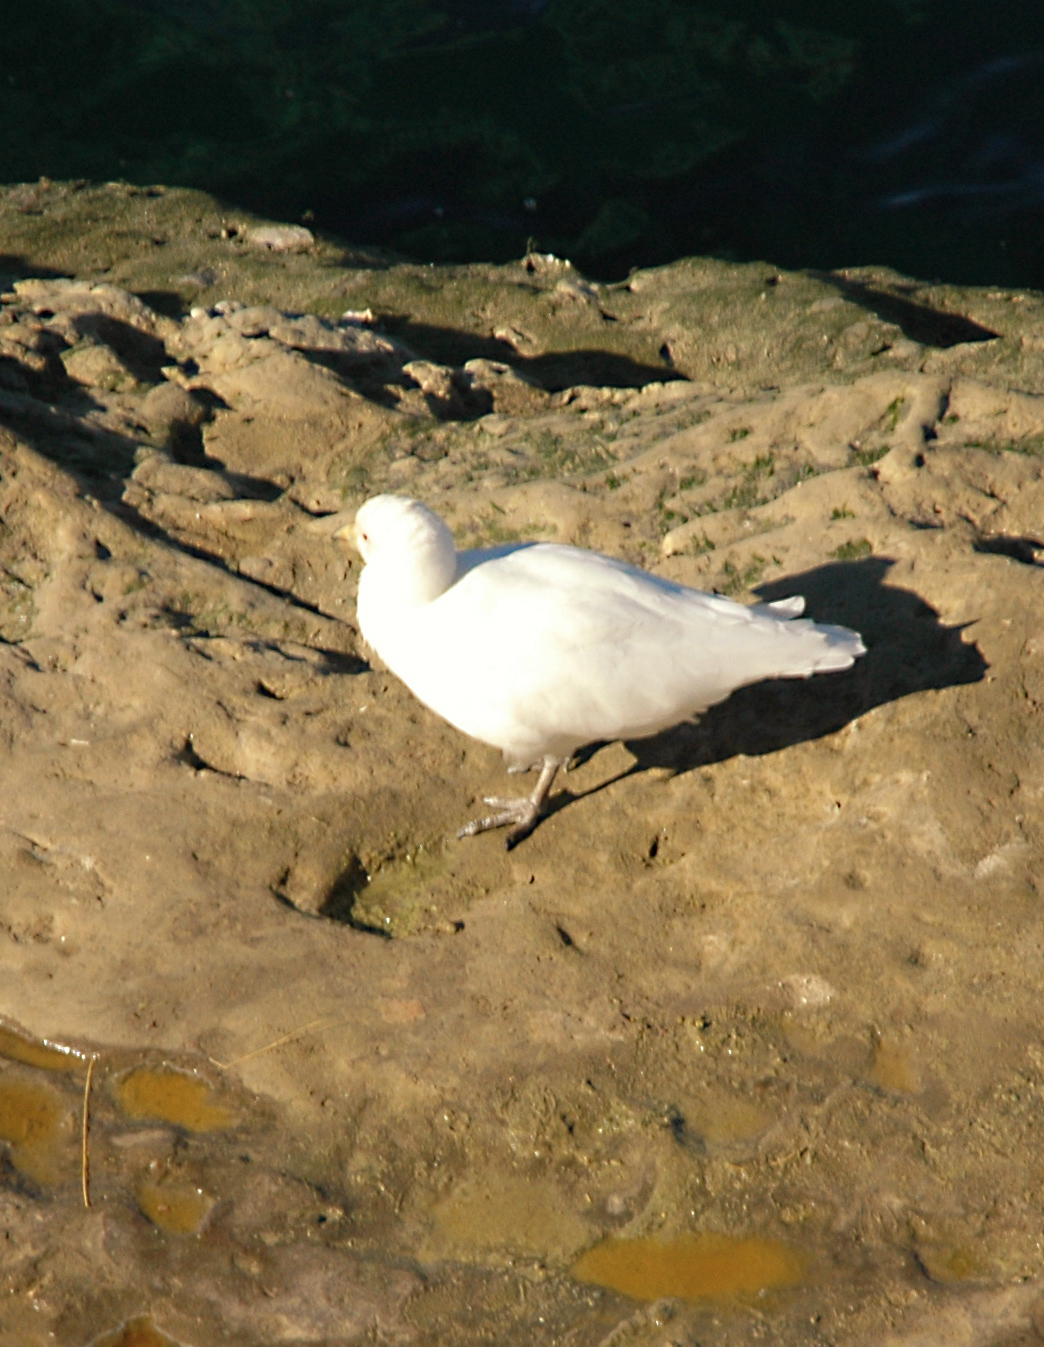 a white bird walks on some rocks